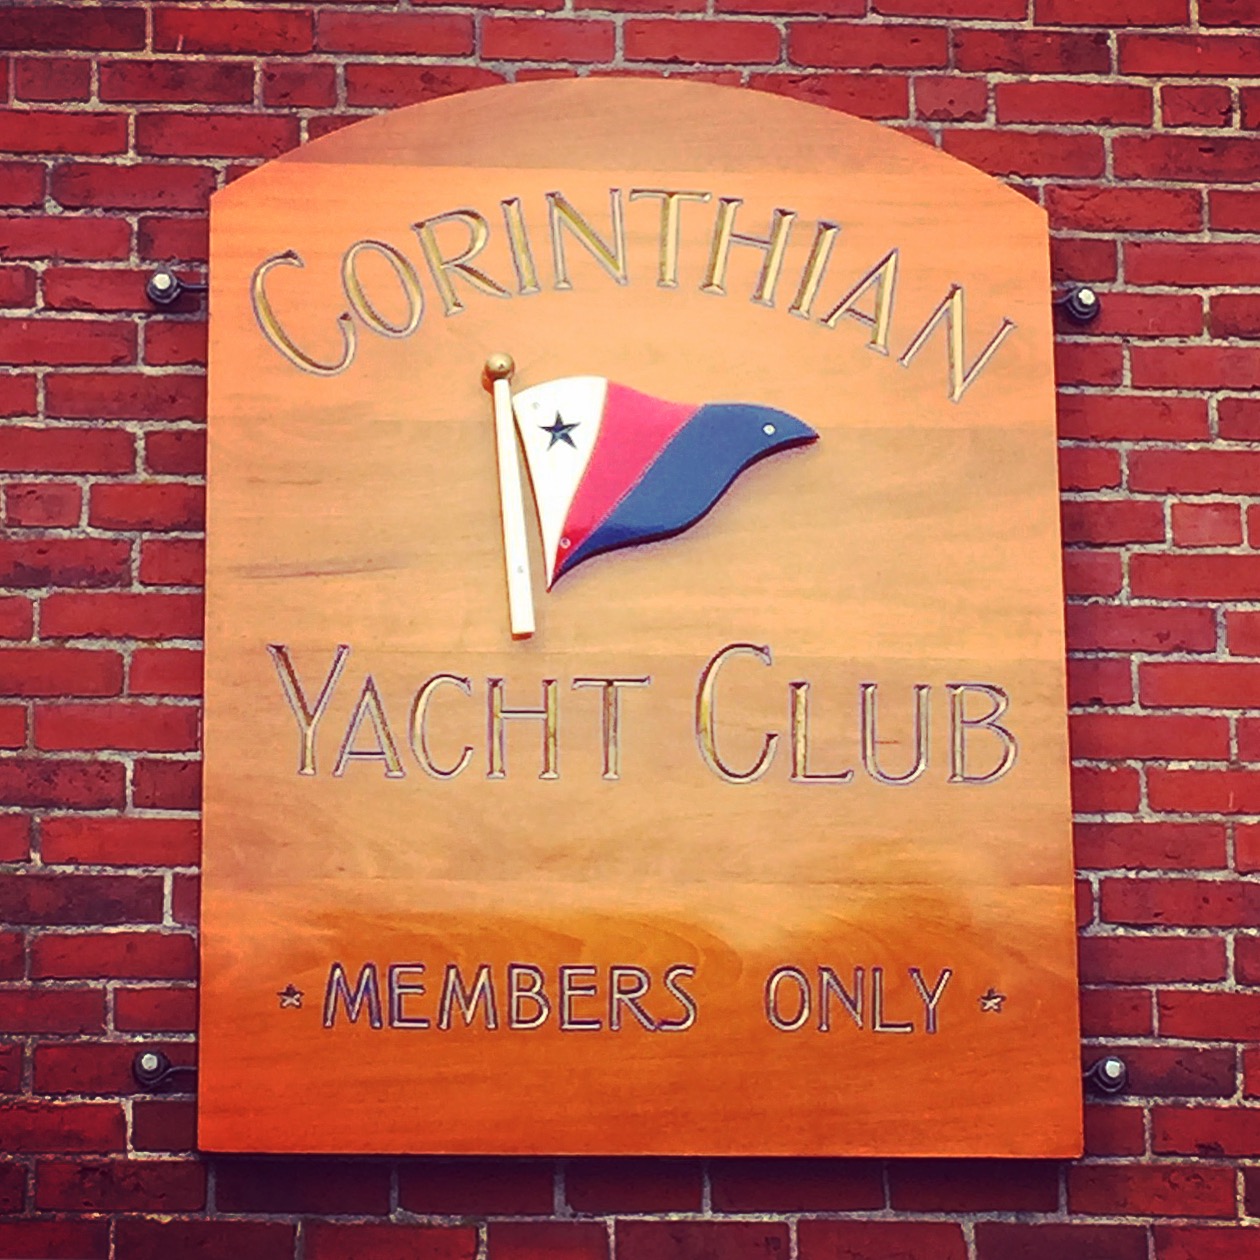 Sign outside the Corinthian Yacht Club Marblehead Massachusetts